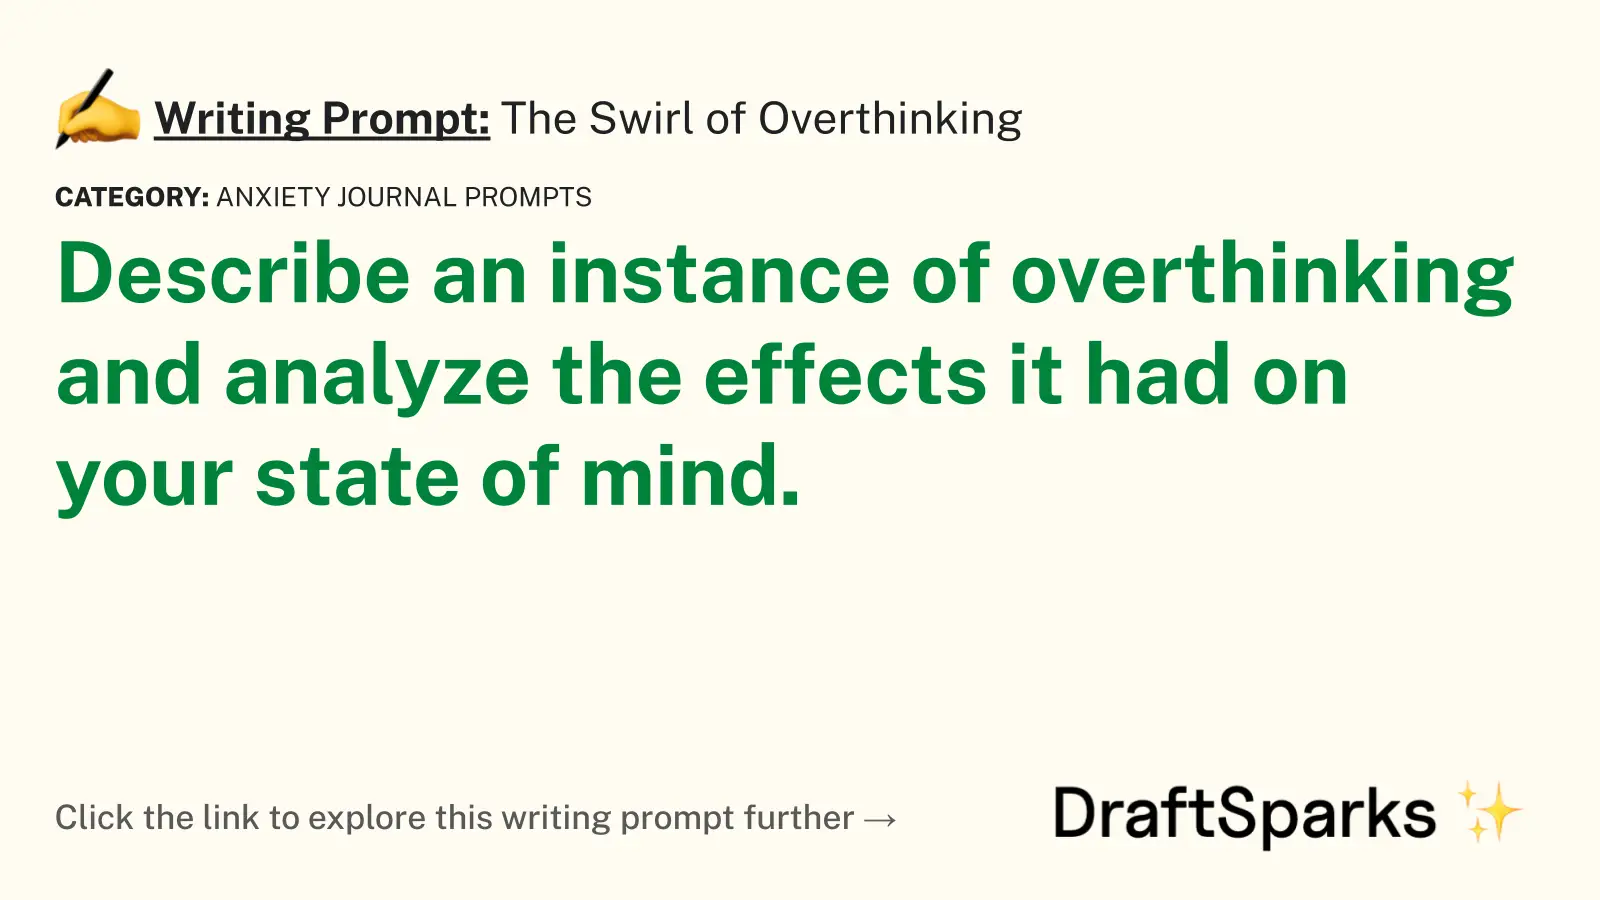 The Swirl of Overthinking